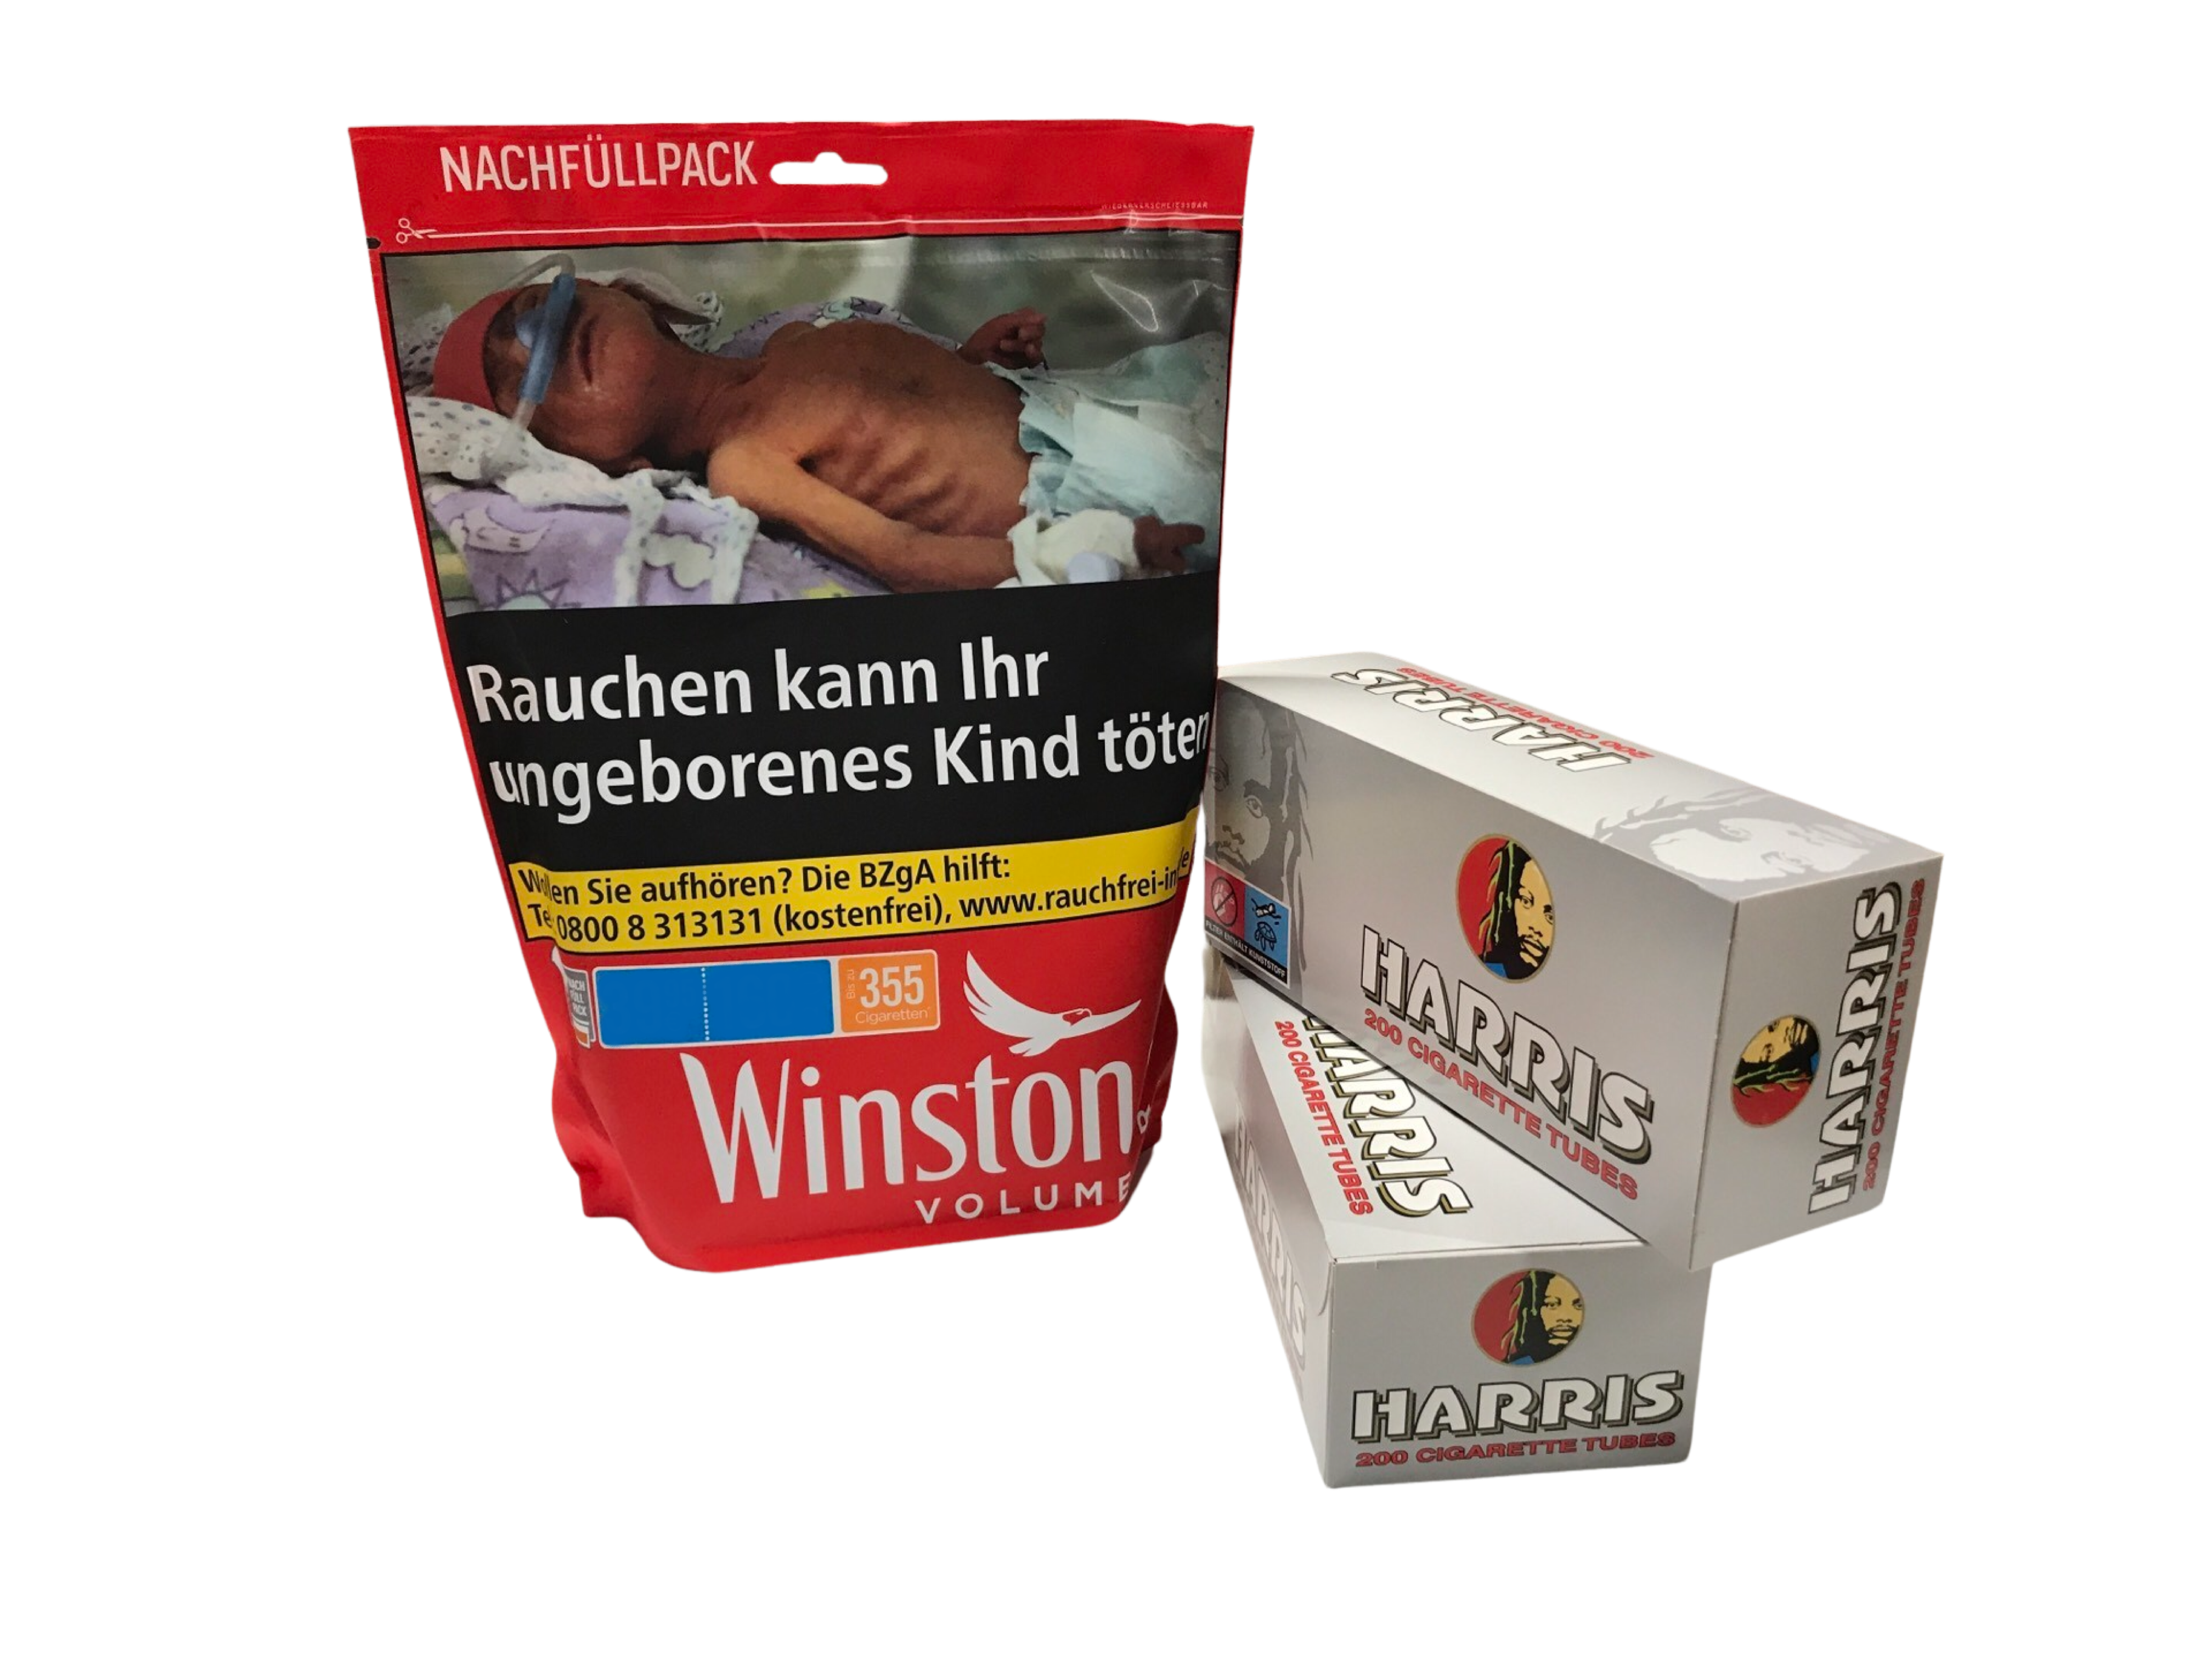 WINSTON Volumen Tobacco Red 155g Beutel + 400 Harris rot Zigarettenhülsen